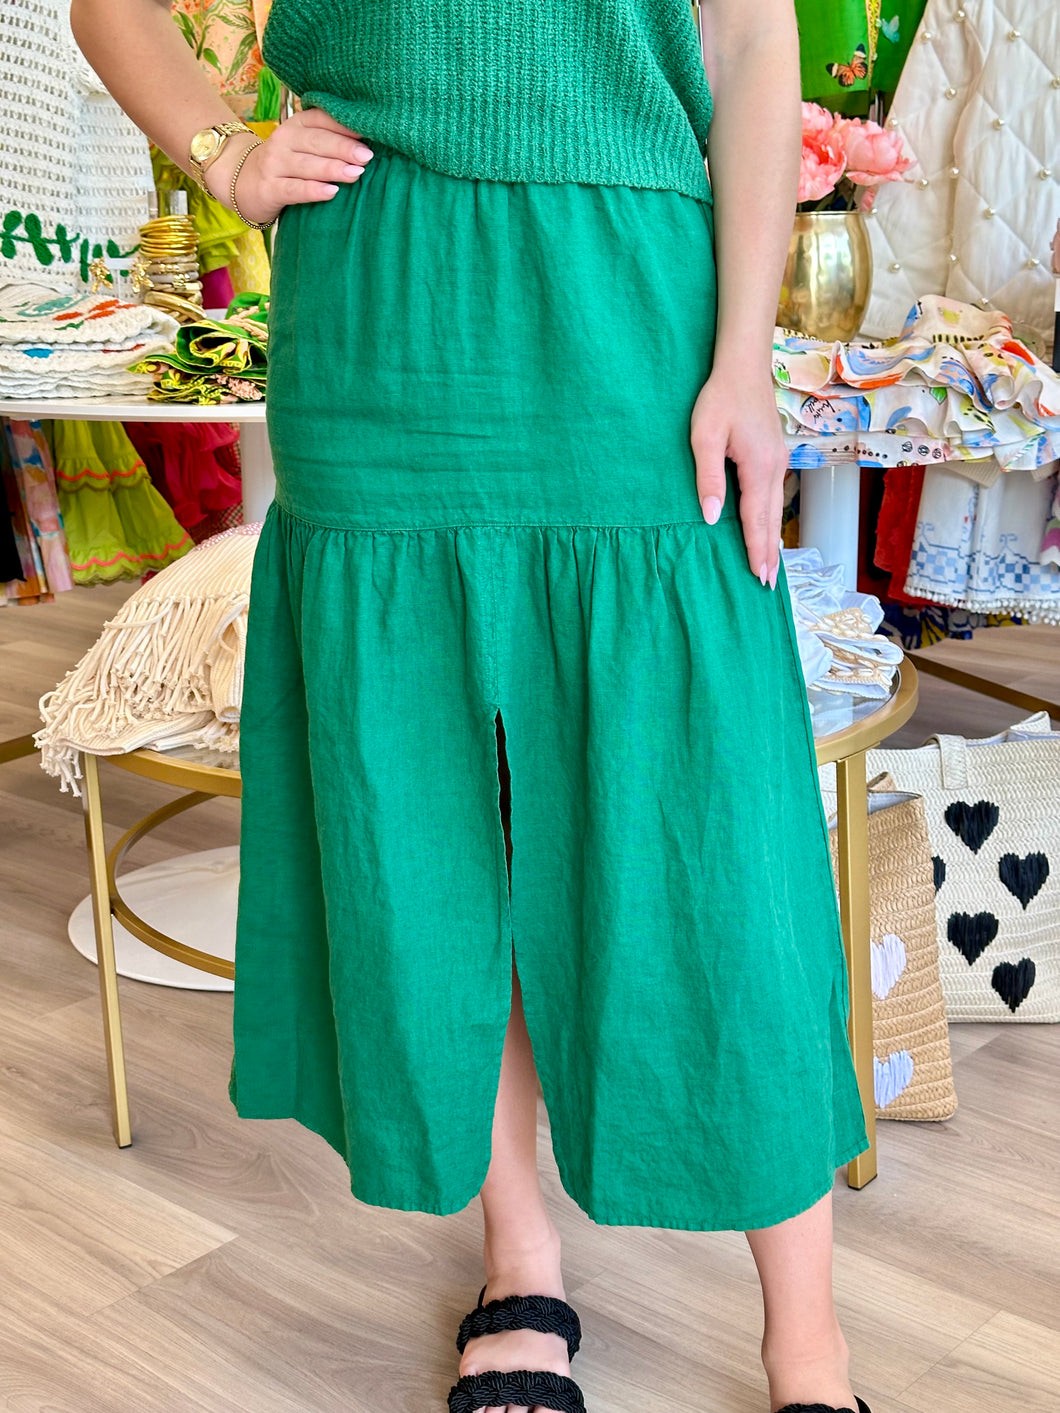 Esmeralda Skirt in Verdant Green